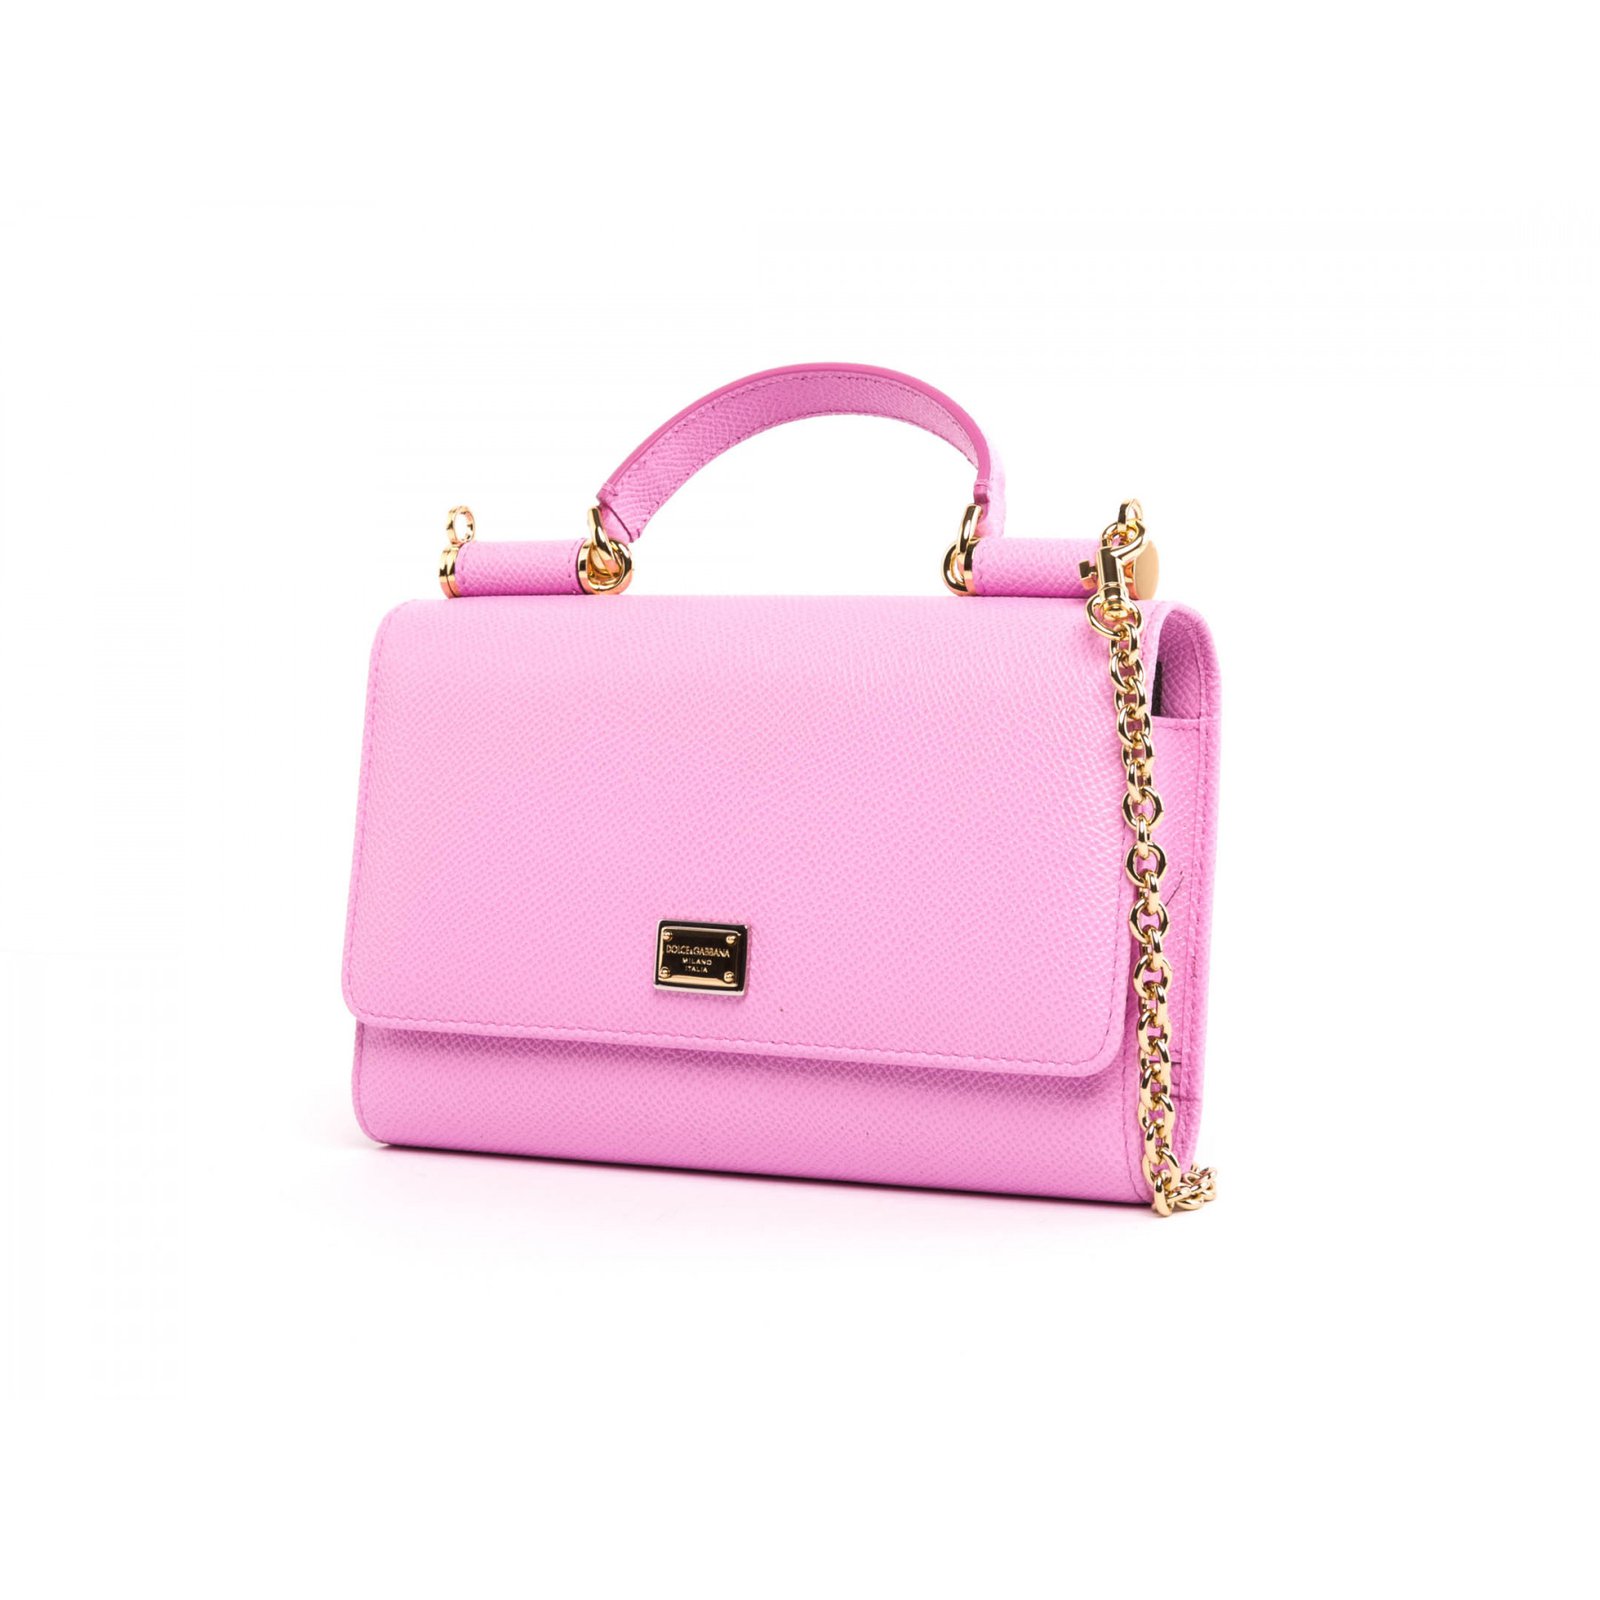 dolce and gabbana pink bag